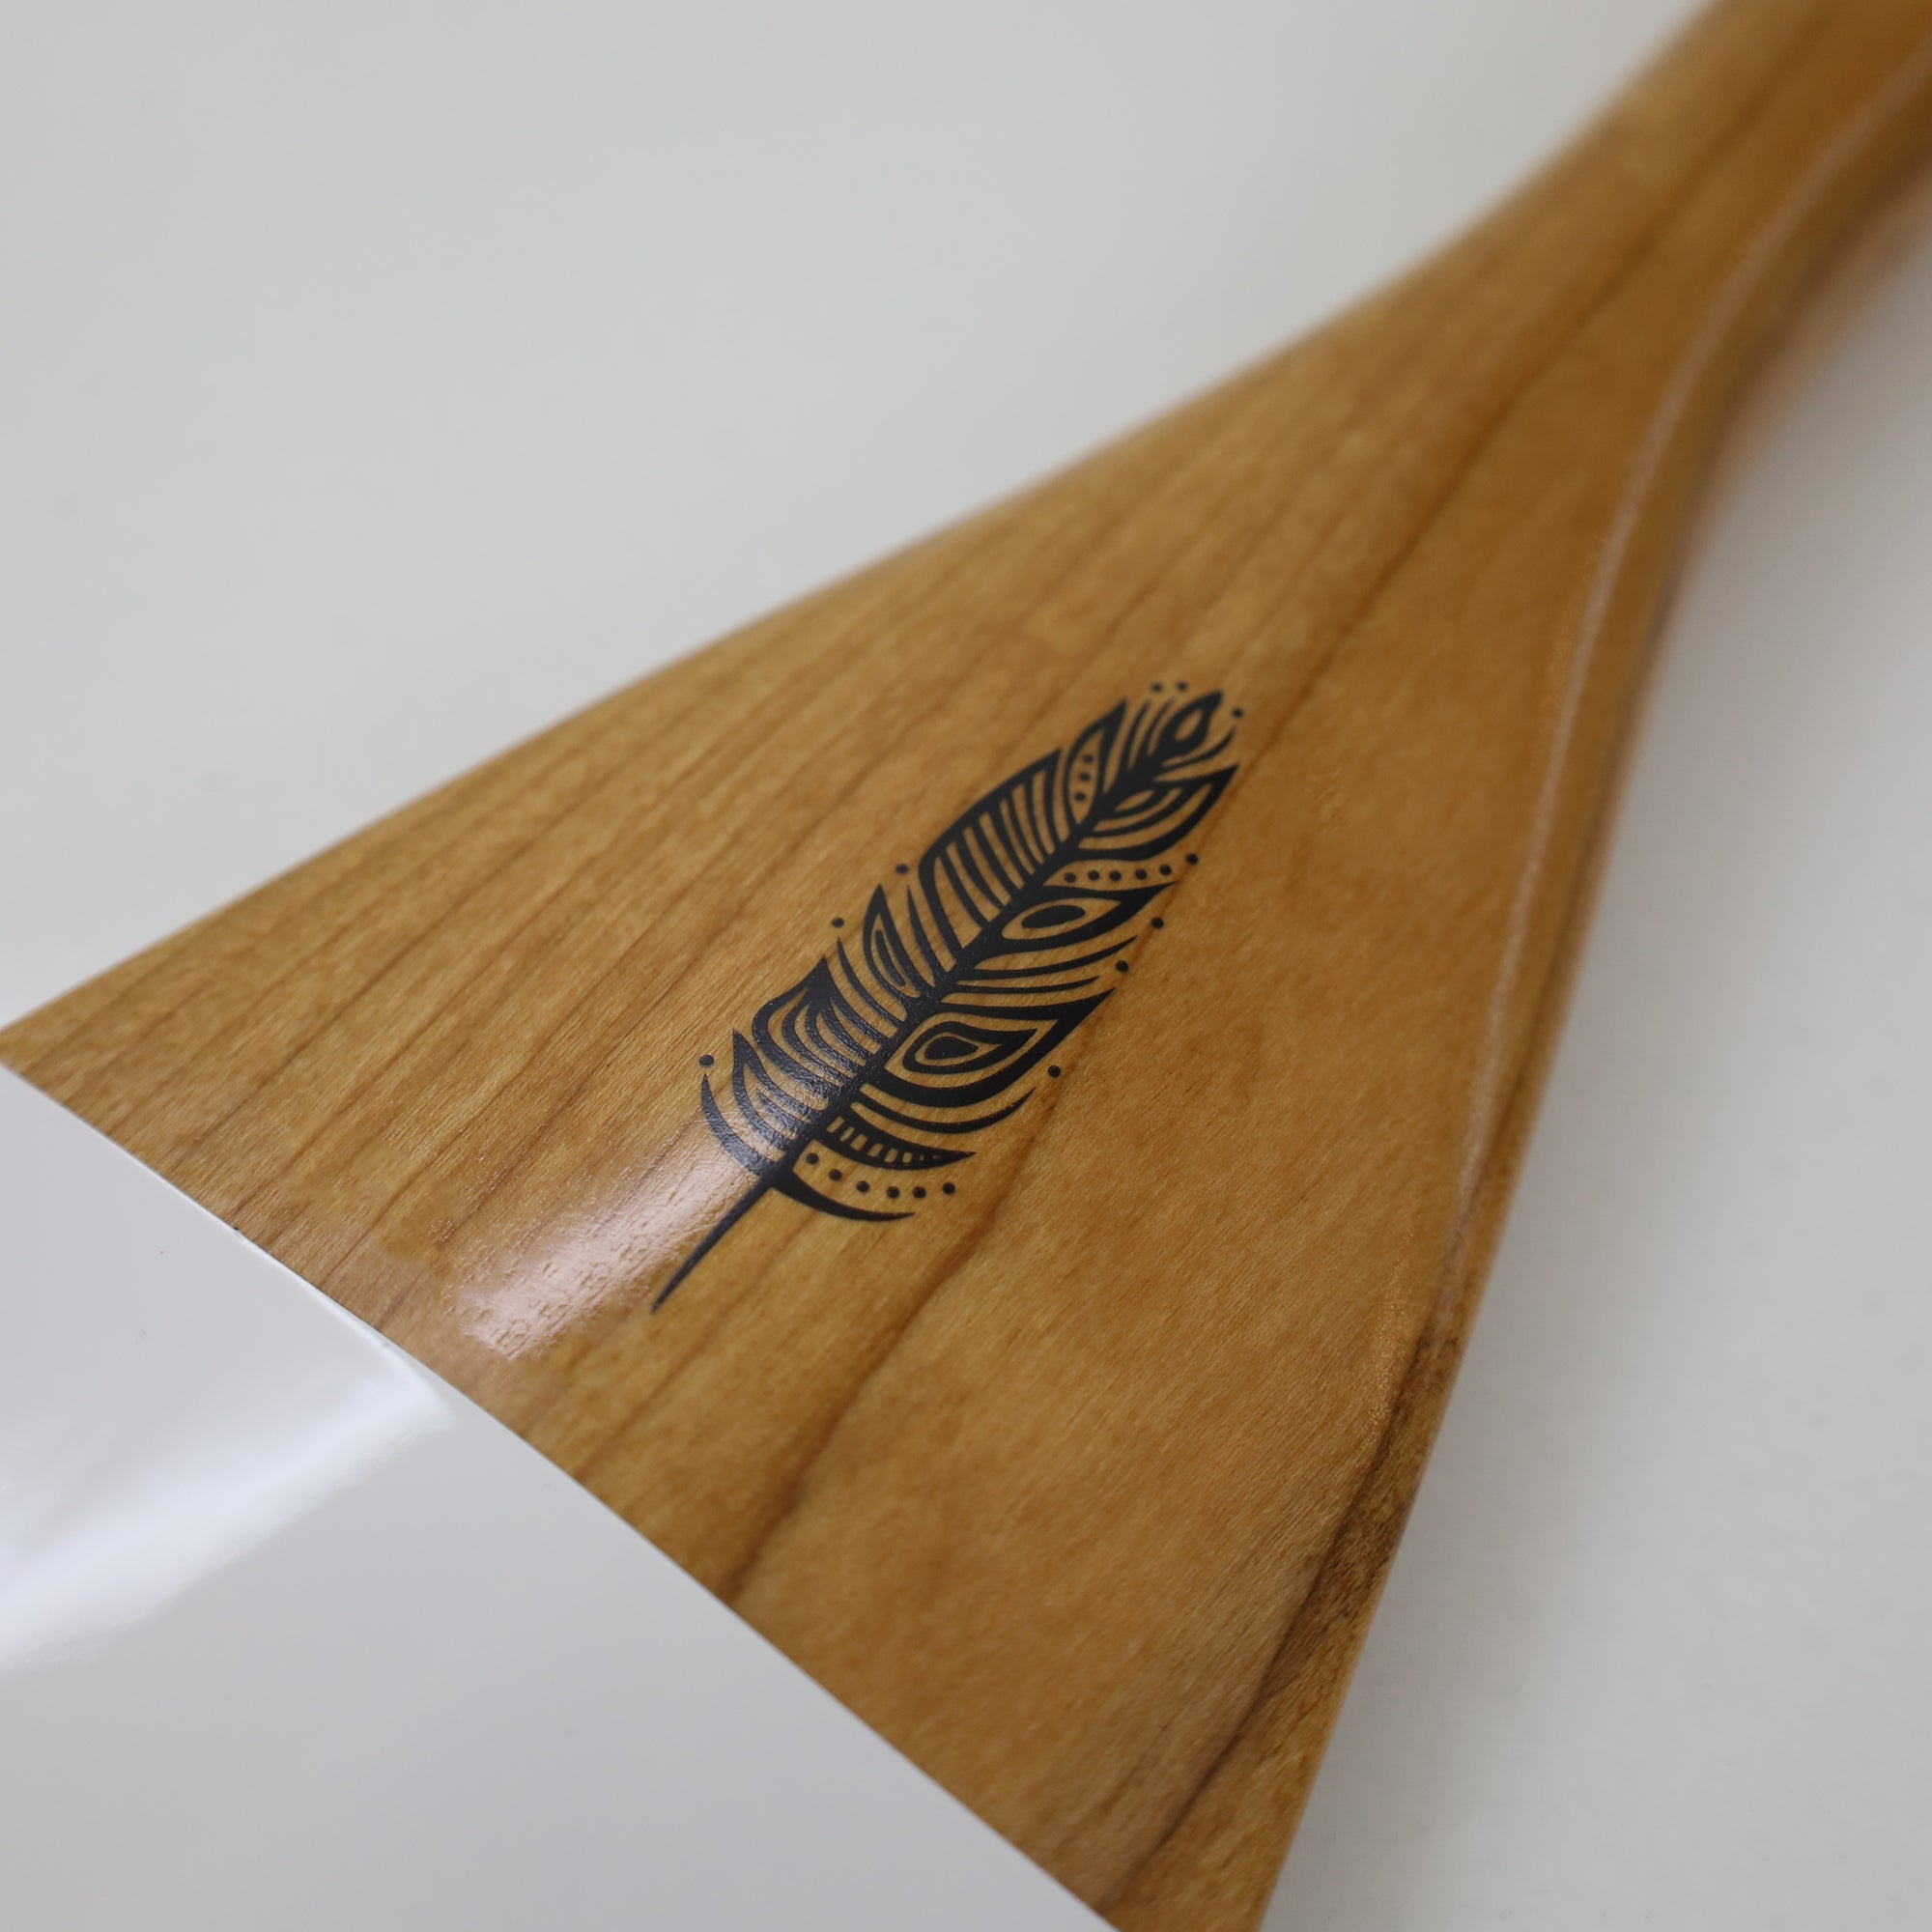 Patrick Hunter - Maple Leaf Limited Edition Paddle